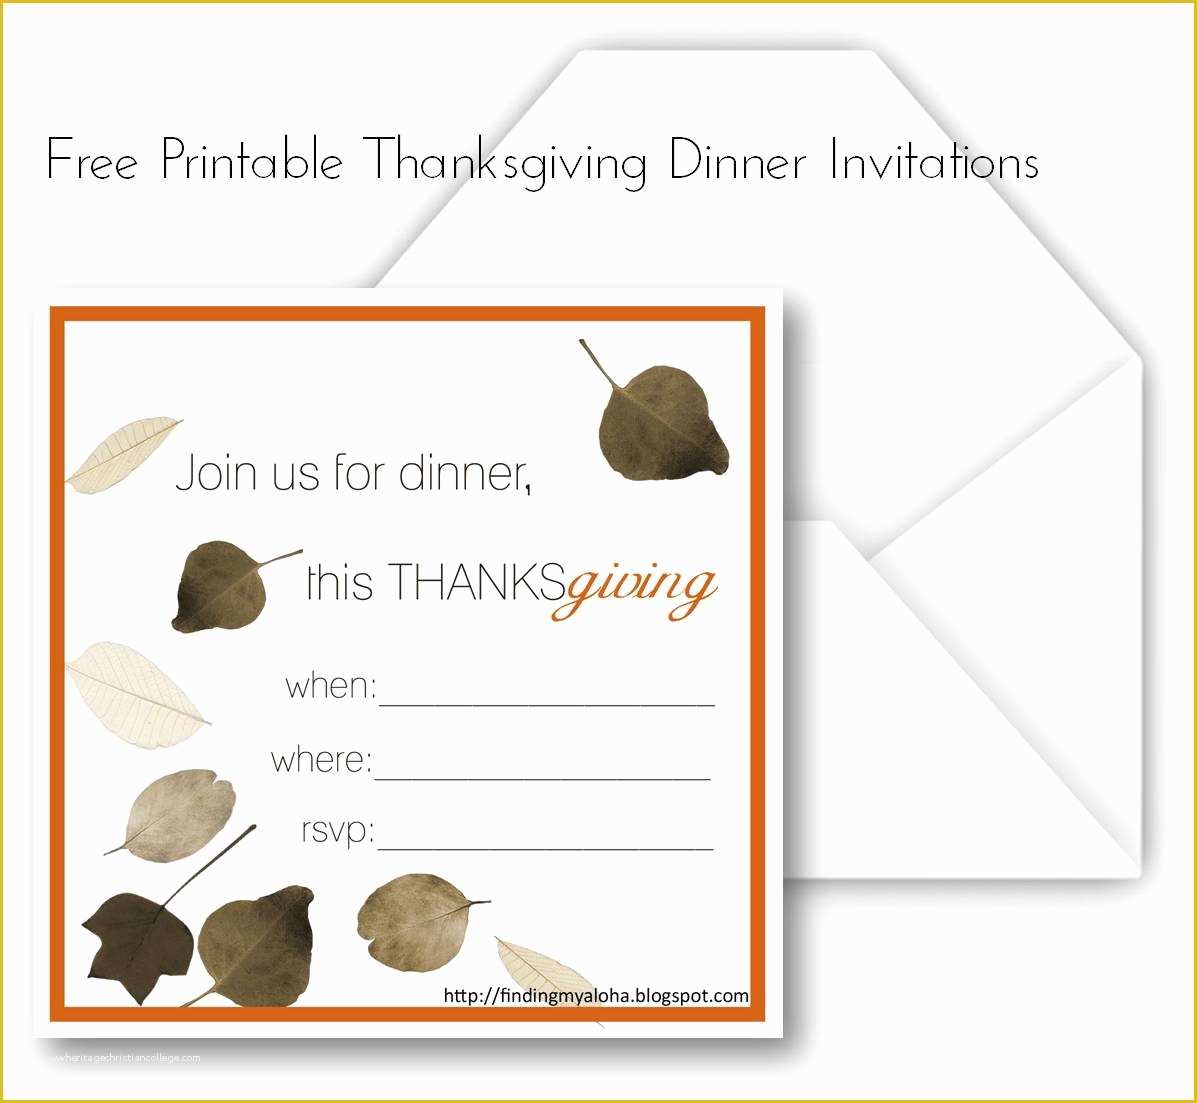 Free Thanksgiving Invitation Templates Of Free Printable Thanksgiving Dinner Invitations